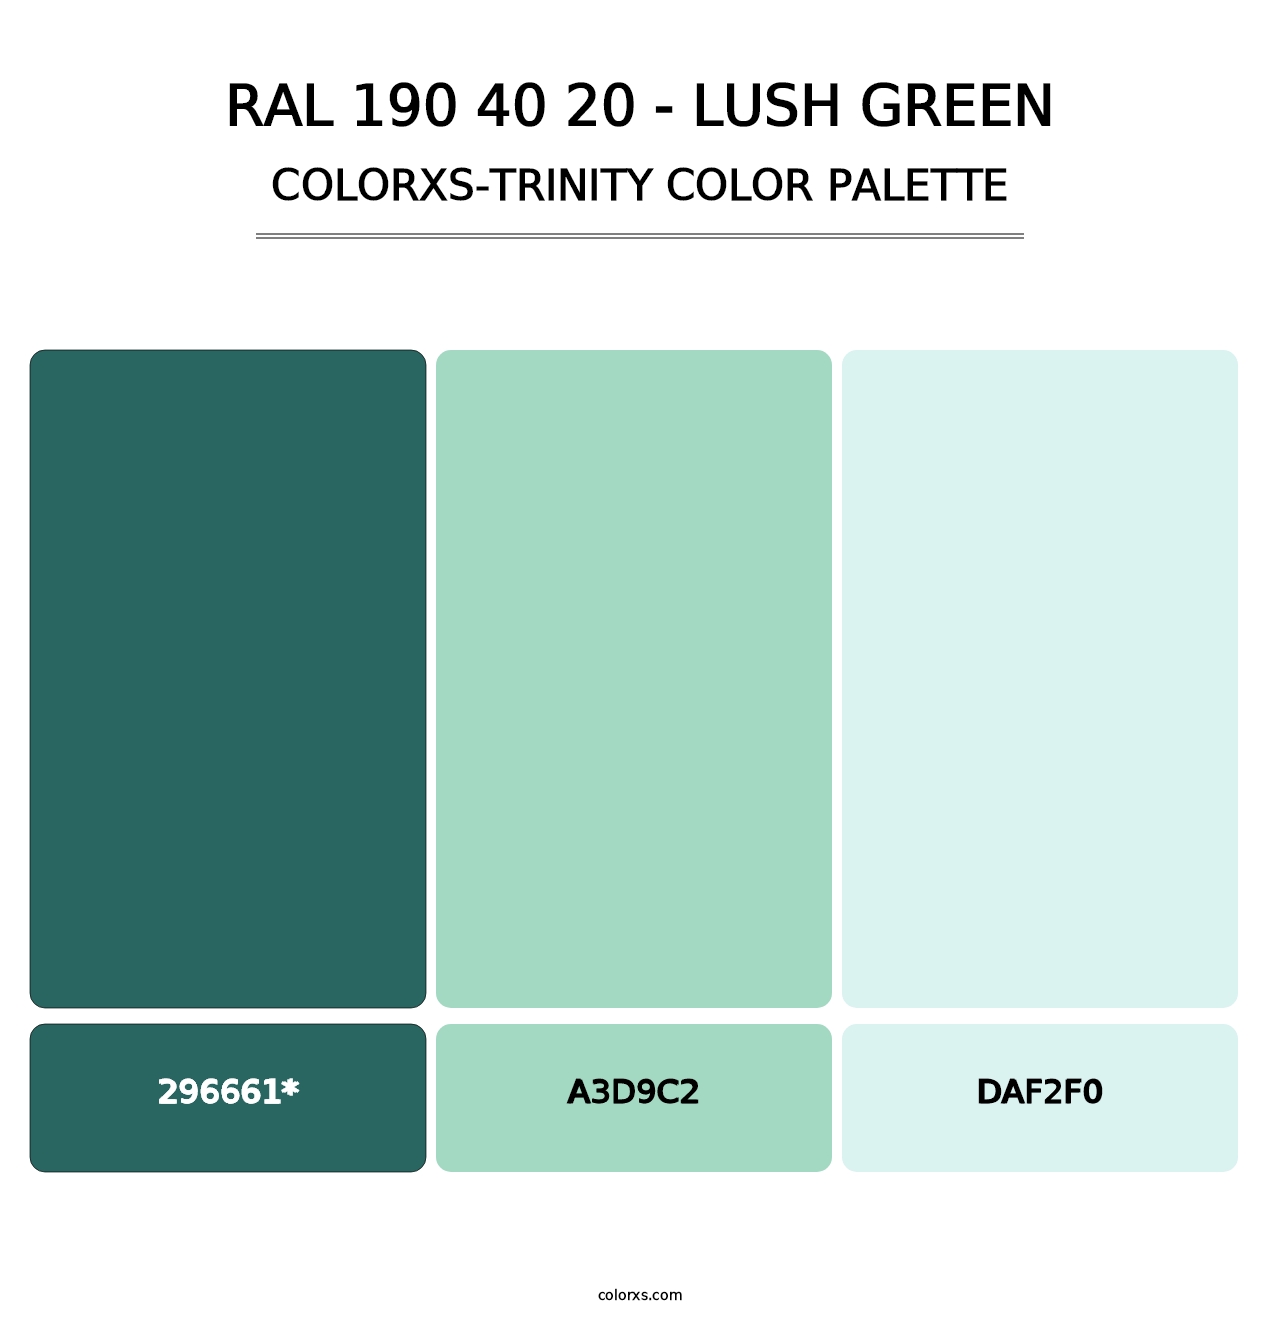 RAL 190 40 20 - Lush Green - Colorxs Trinity Palette